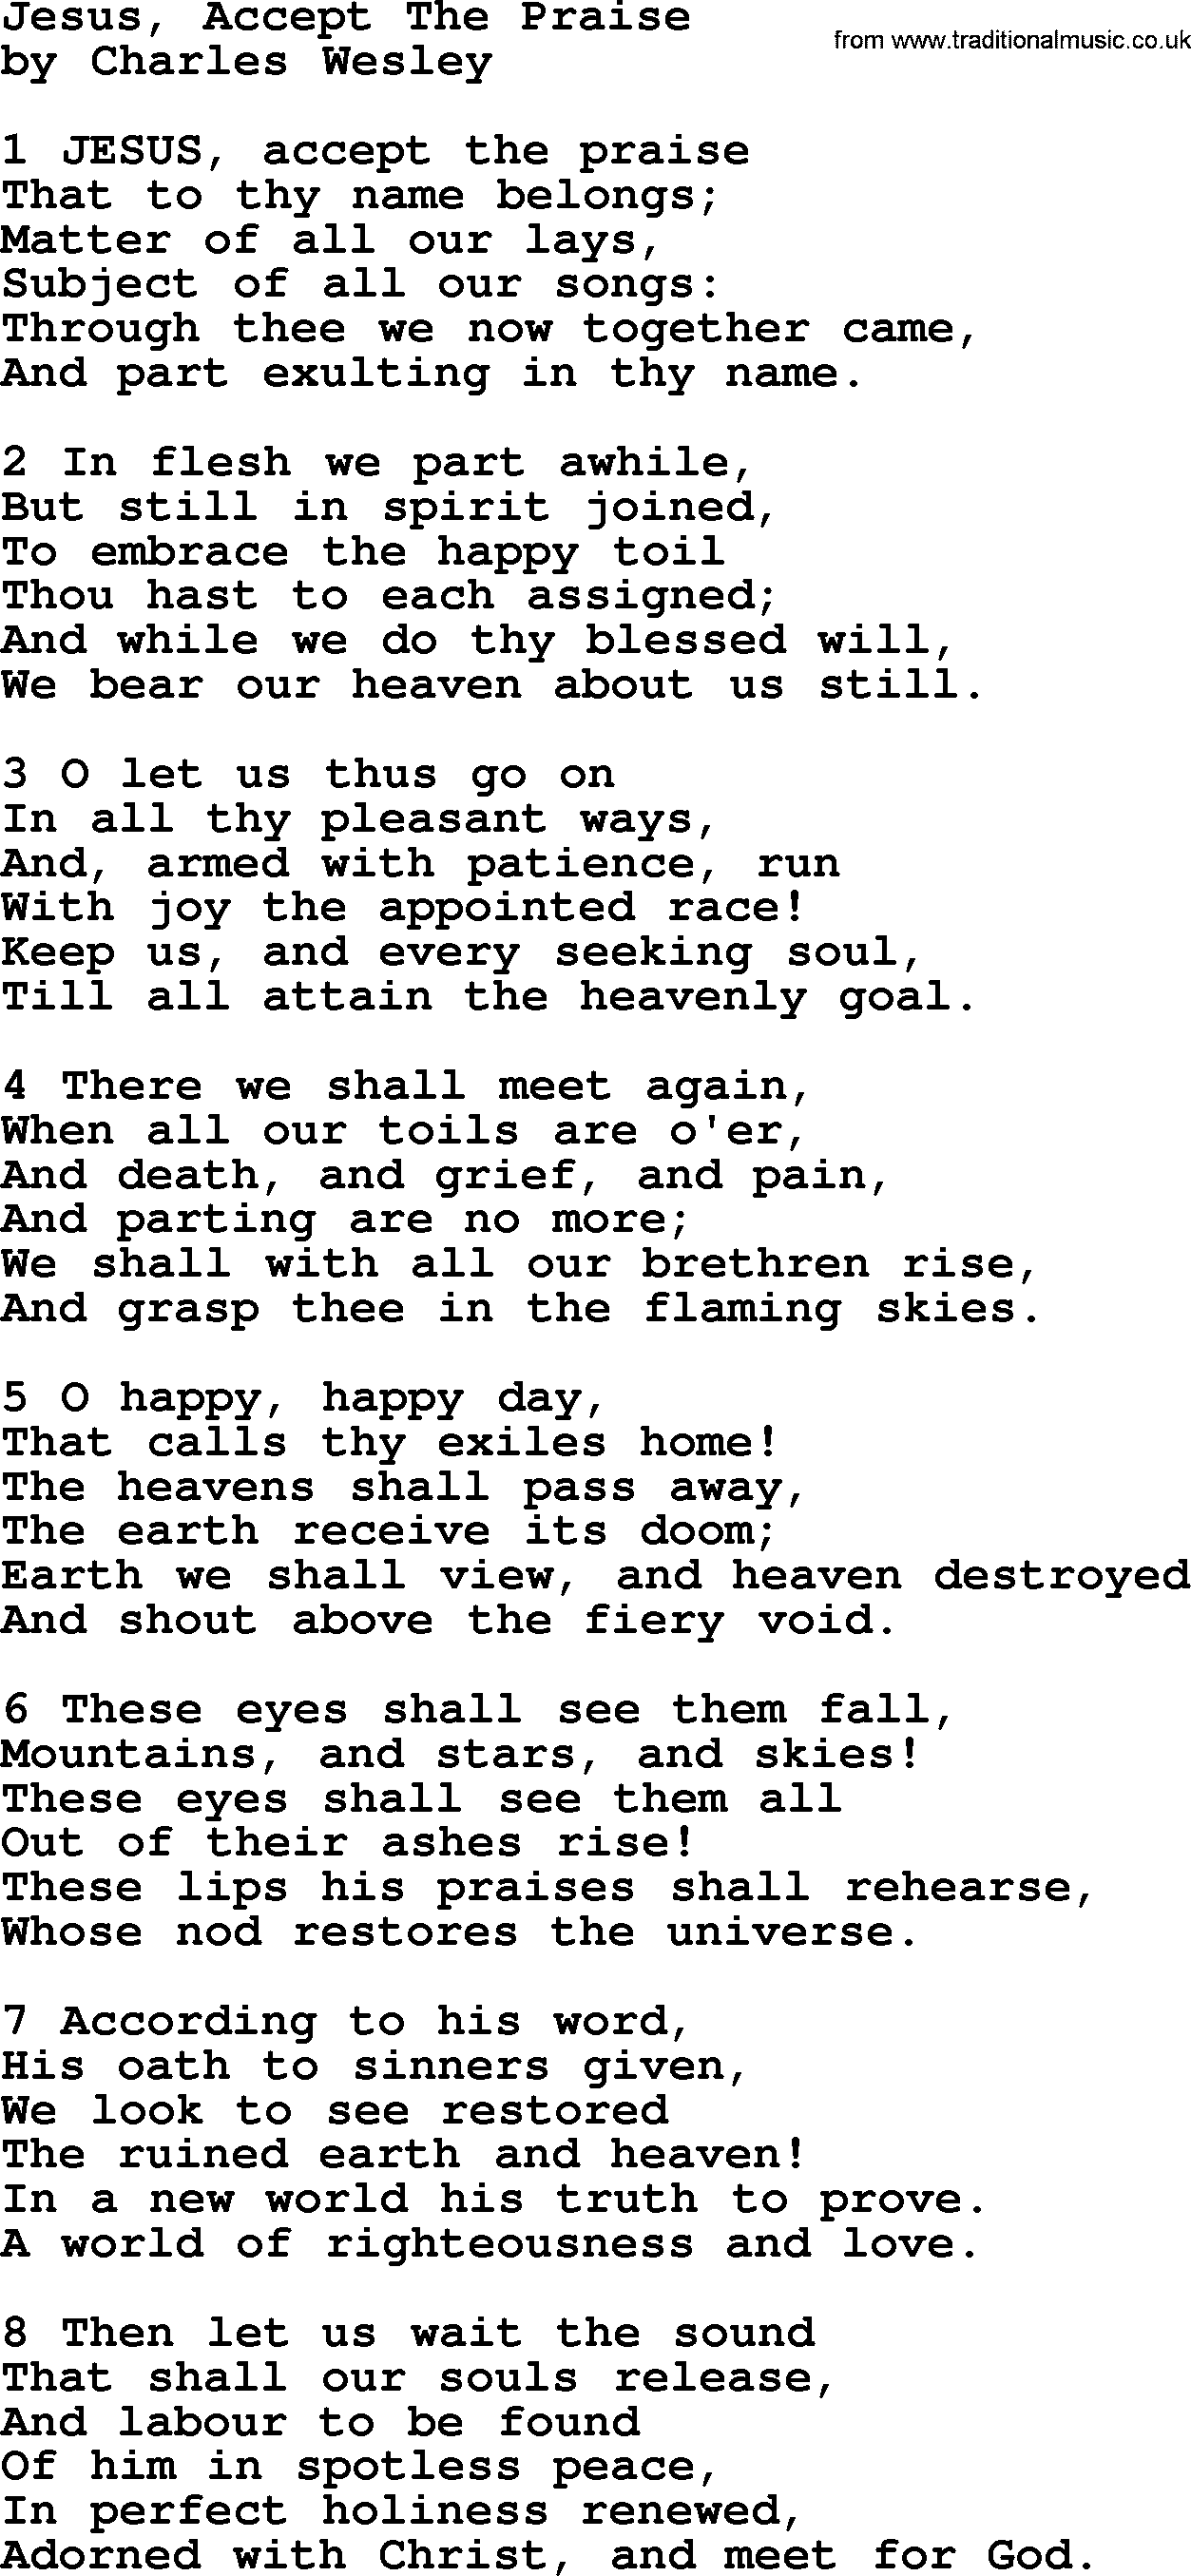 Charles Wesley hymn: Jesus, Accept The Praise, lyrics